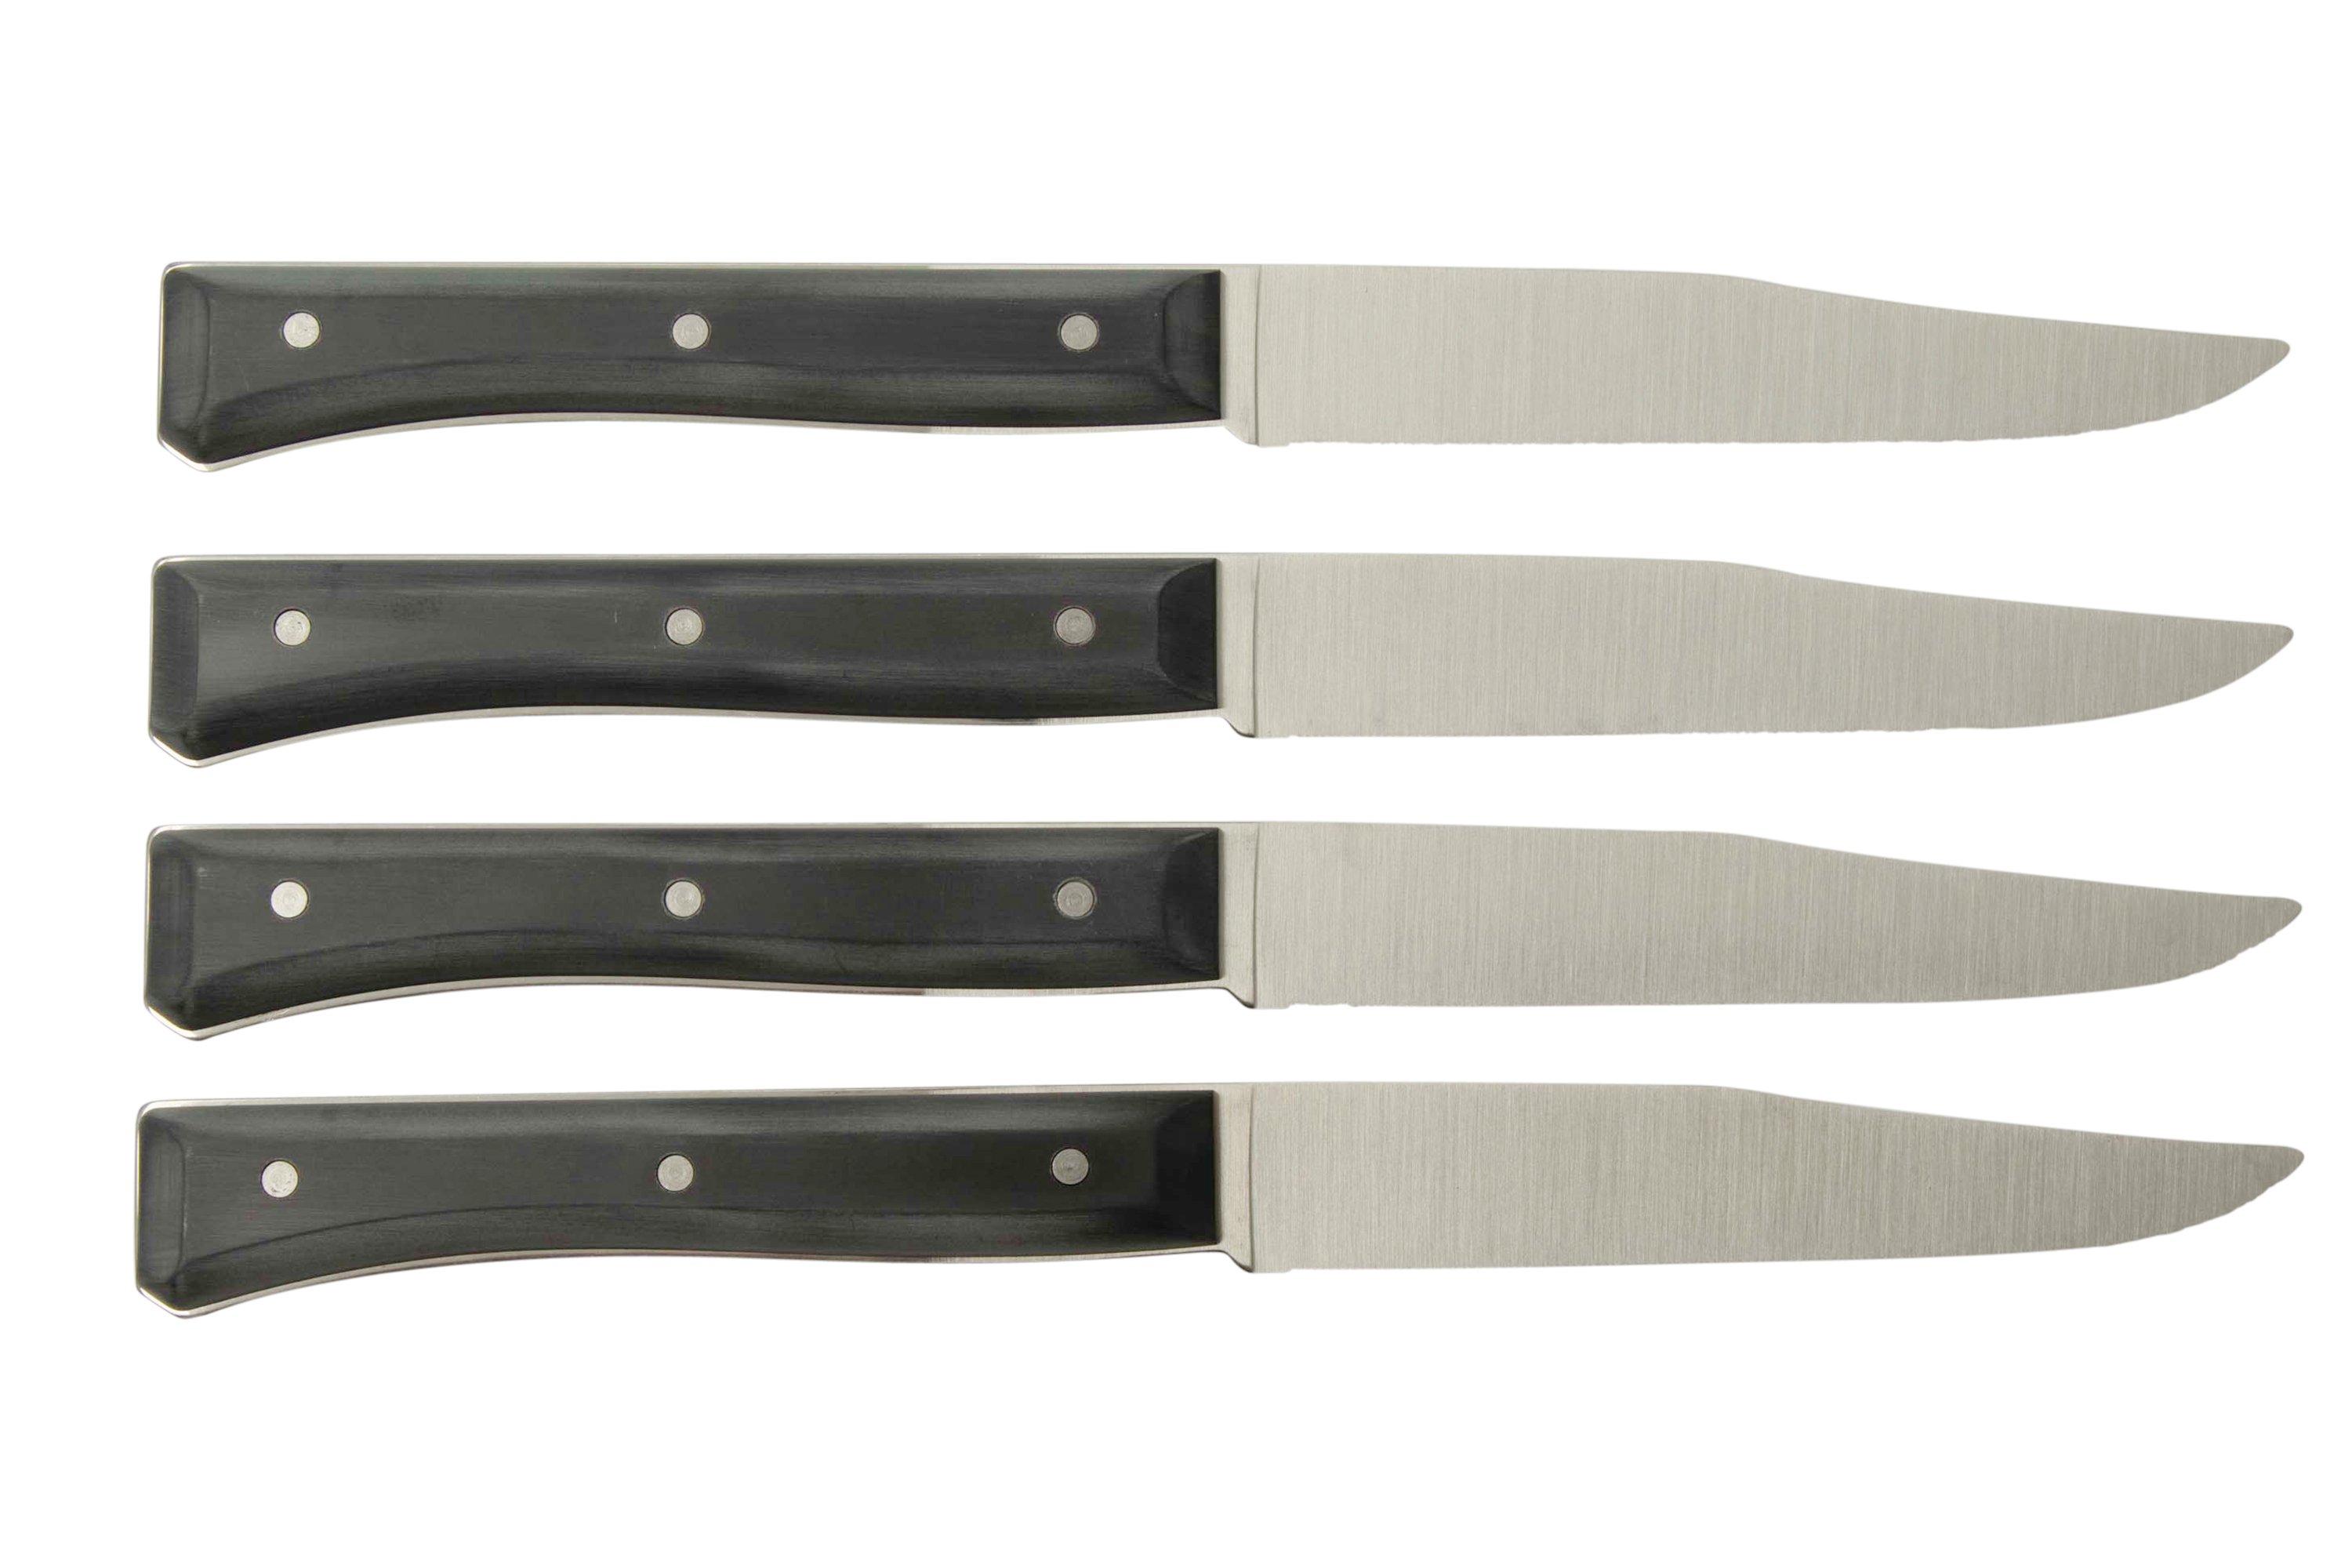 4-Piece Micro-Serrated Ceramic Steak Knife Set - Black/White